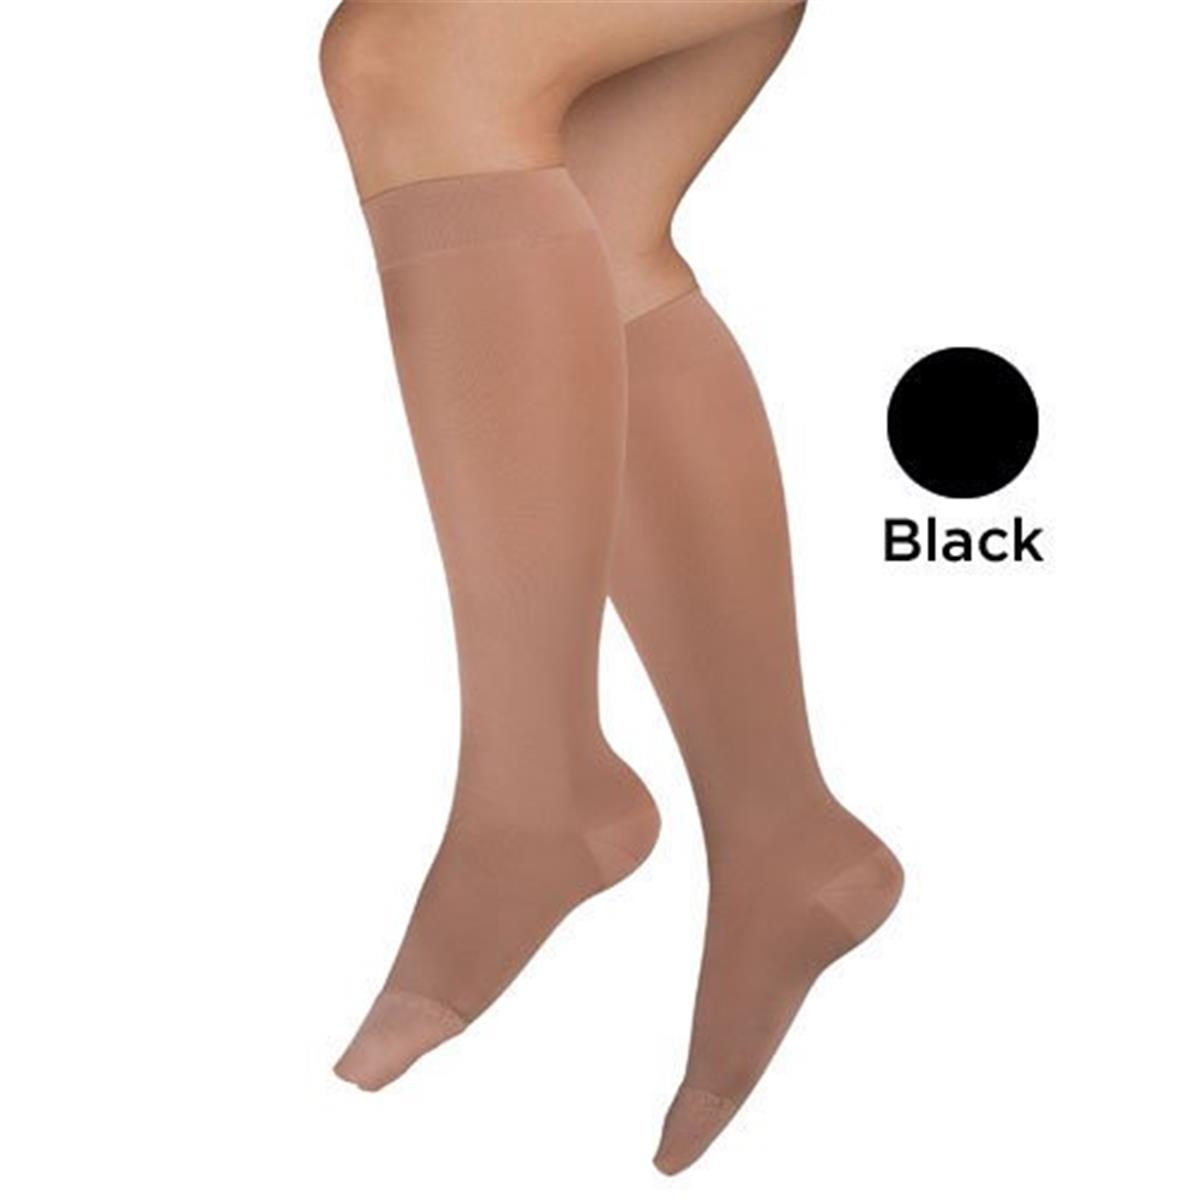 Picture of Blue Jay BJ390BLM 15-20 mmHg Ladies Sheer Mild Support Knee High&#44; Black - Medium